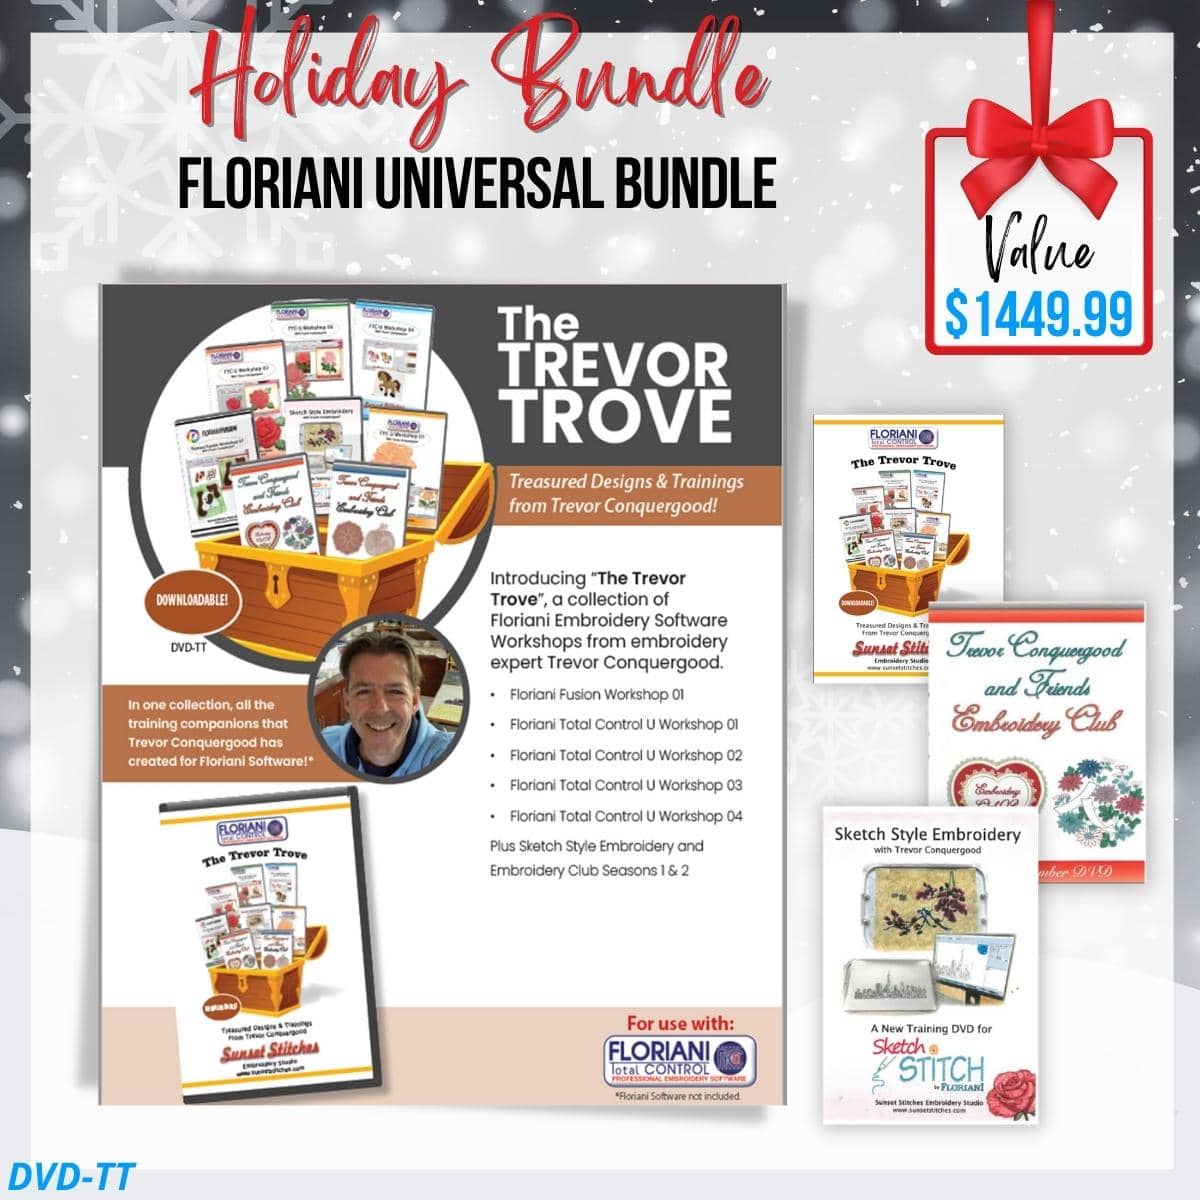 Floriani Universal Bundle for holiday sale